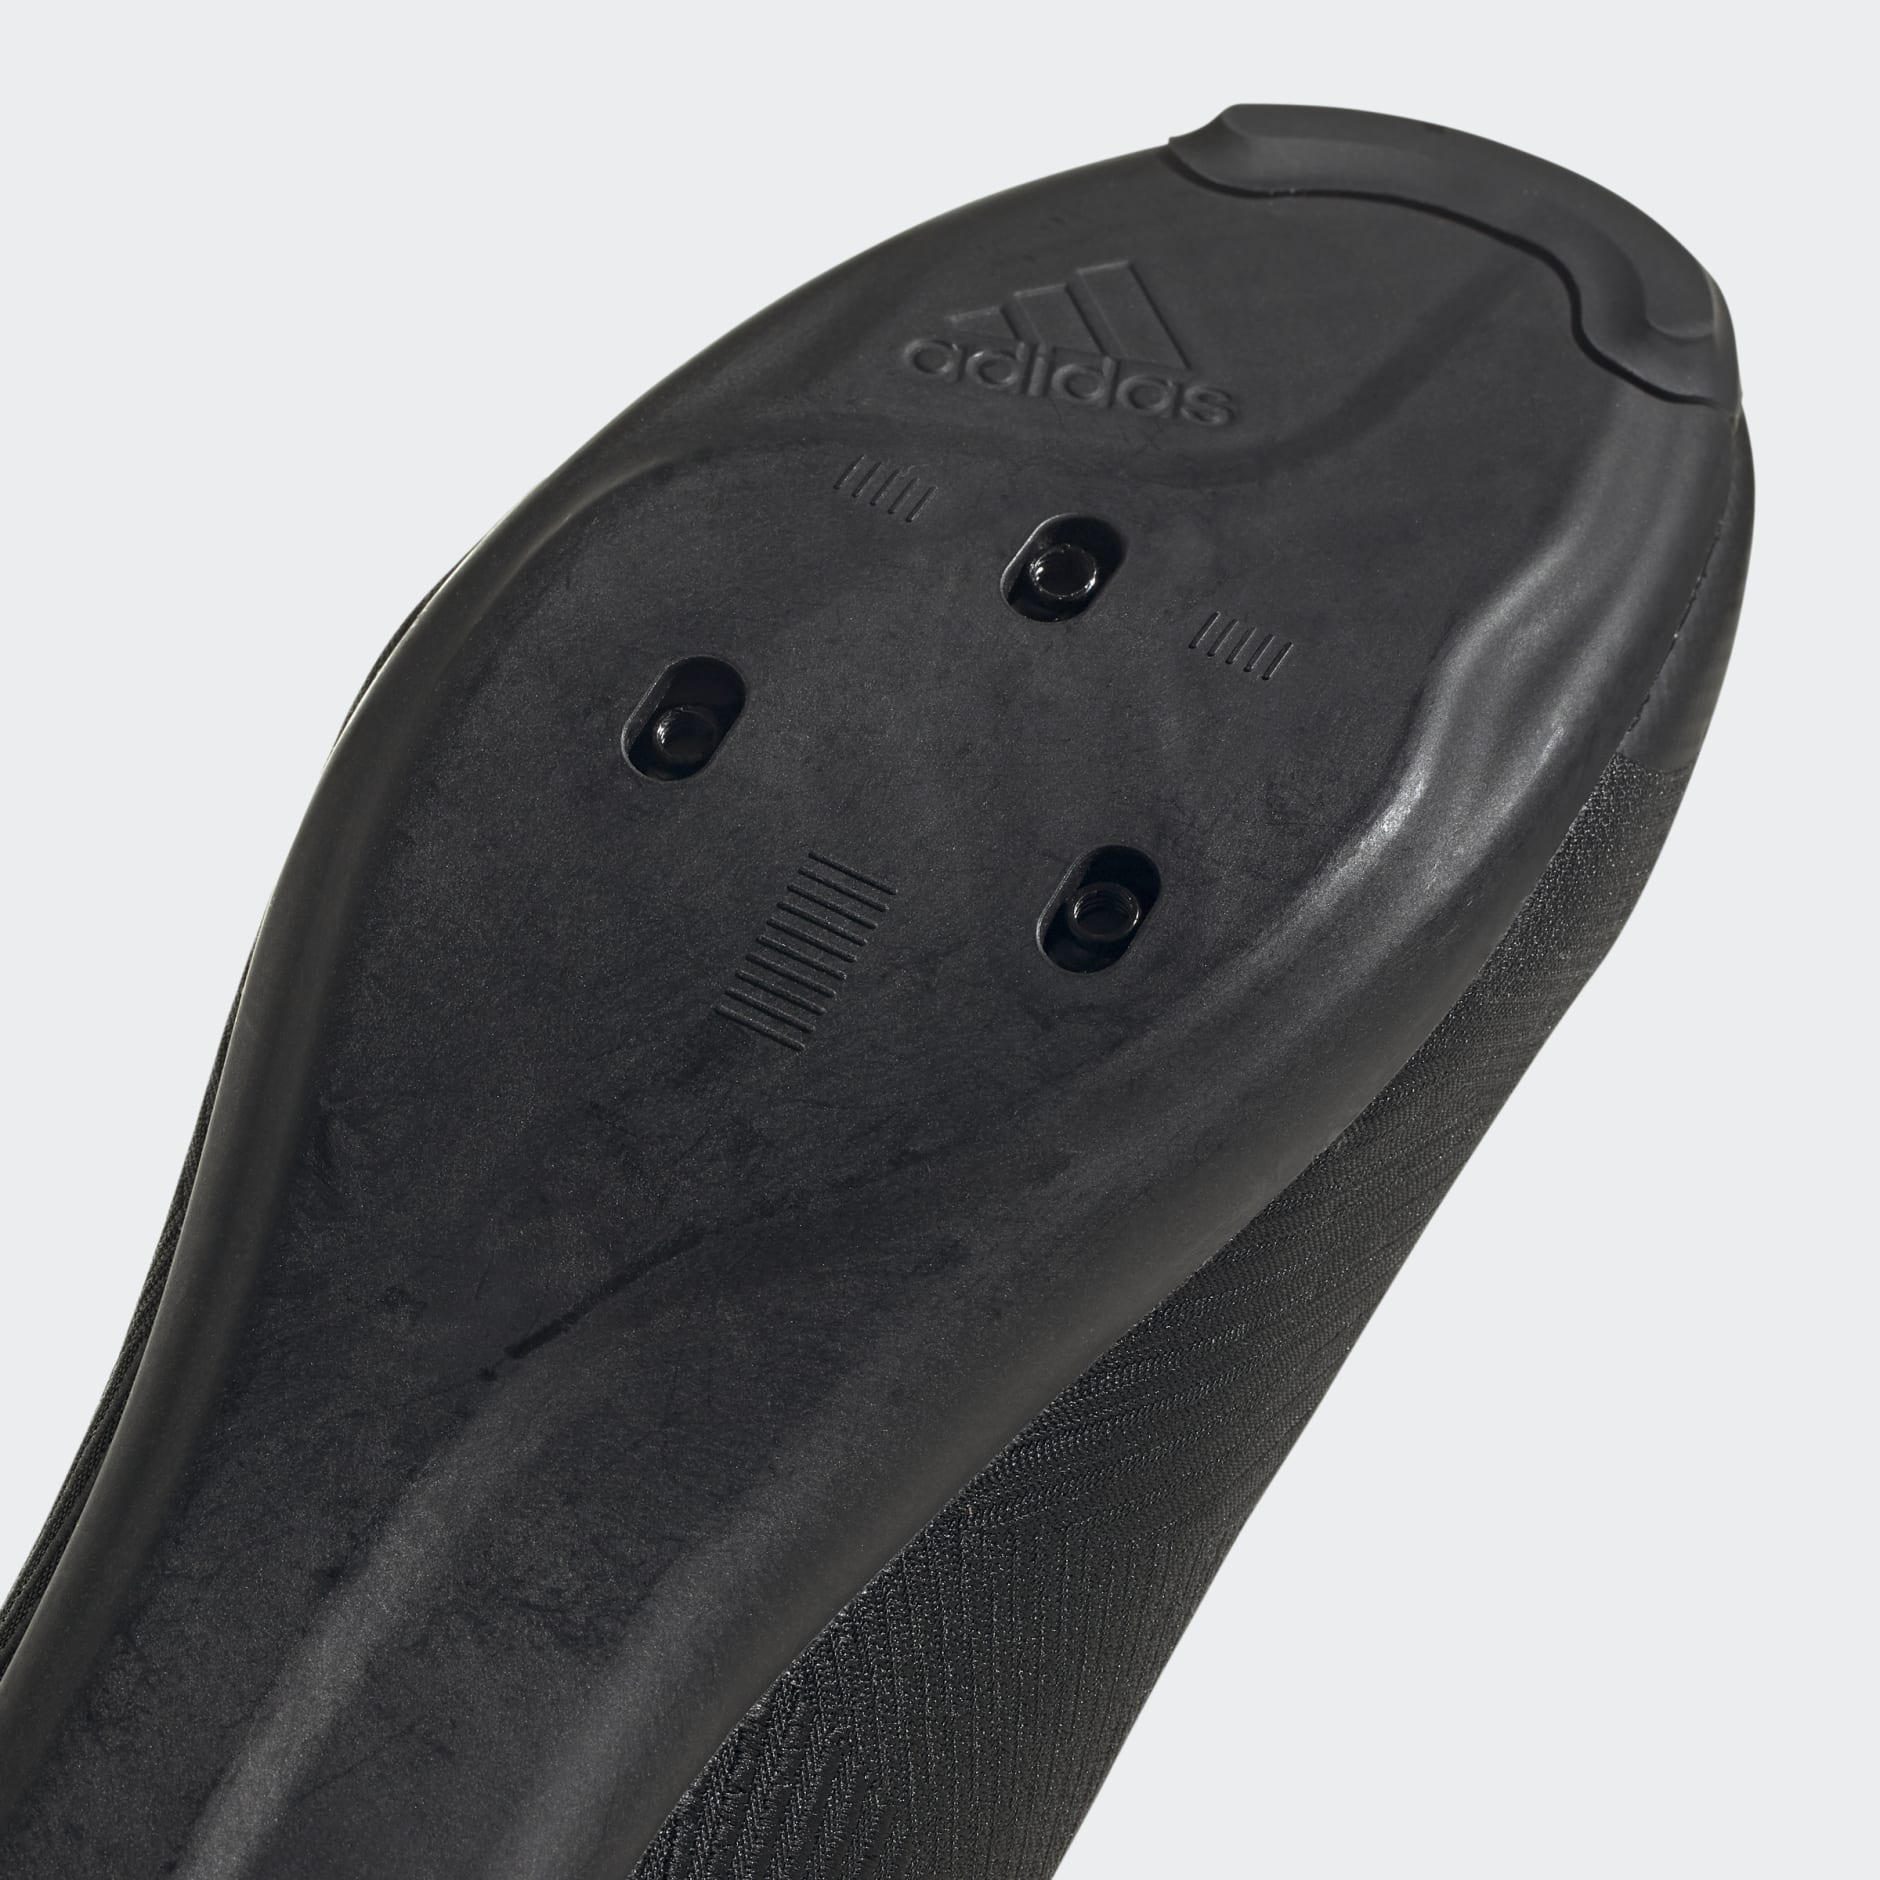 test - The Road Cycling Shoes - Black | adidas Arabia